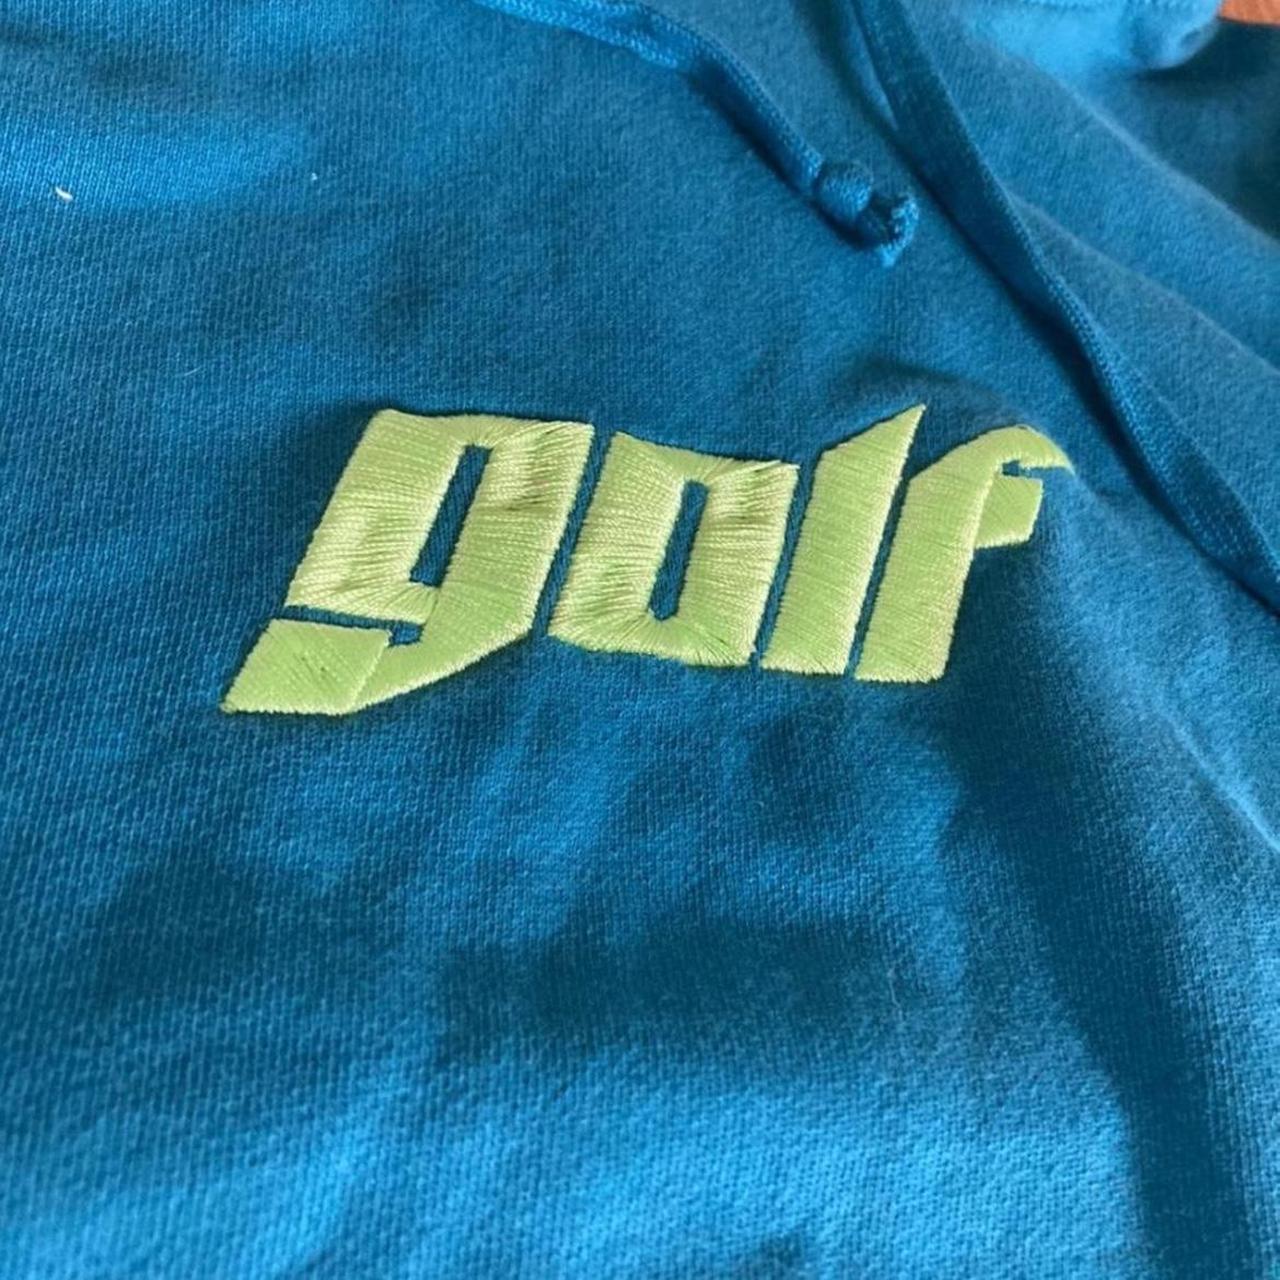 Golf Tyler the Creator hoodie repop - from Winter... - Depop